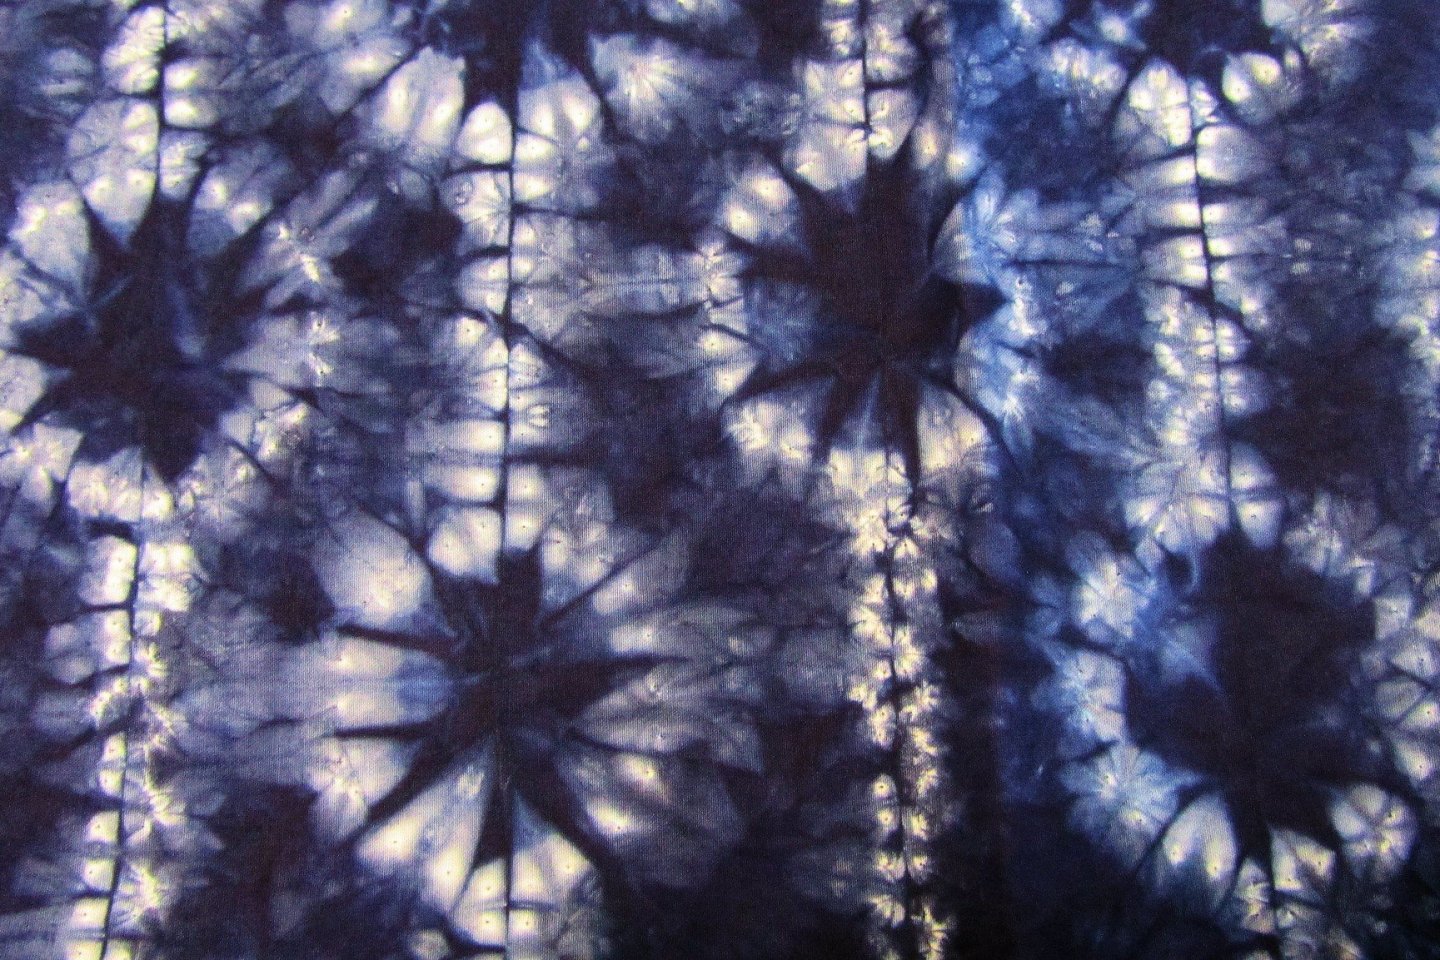 Keisuke Serizawa\'s indigo dyeing has inspired many other creations